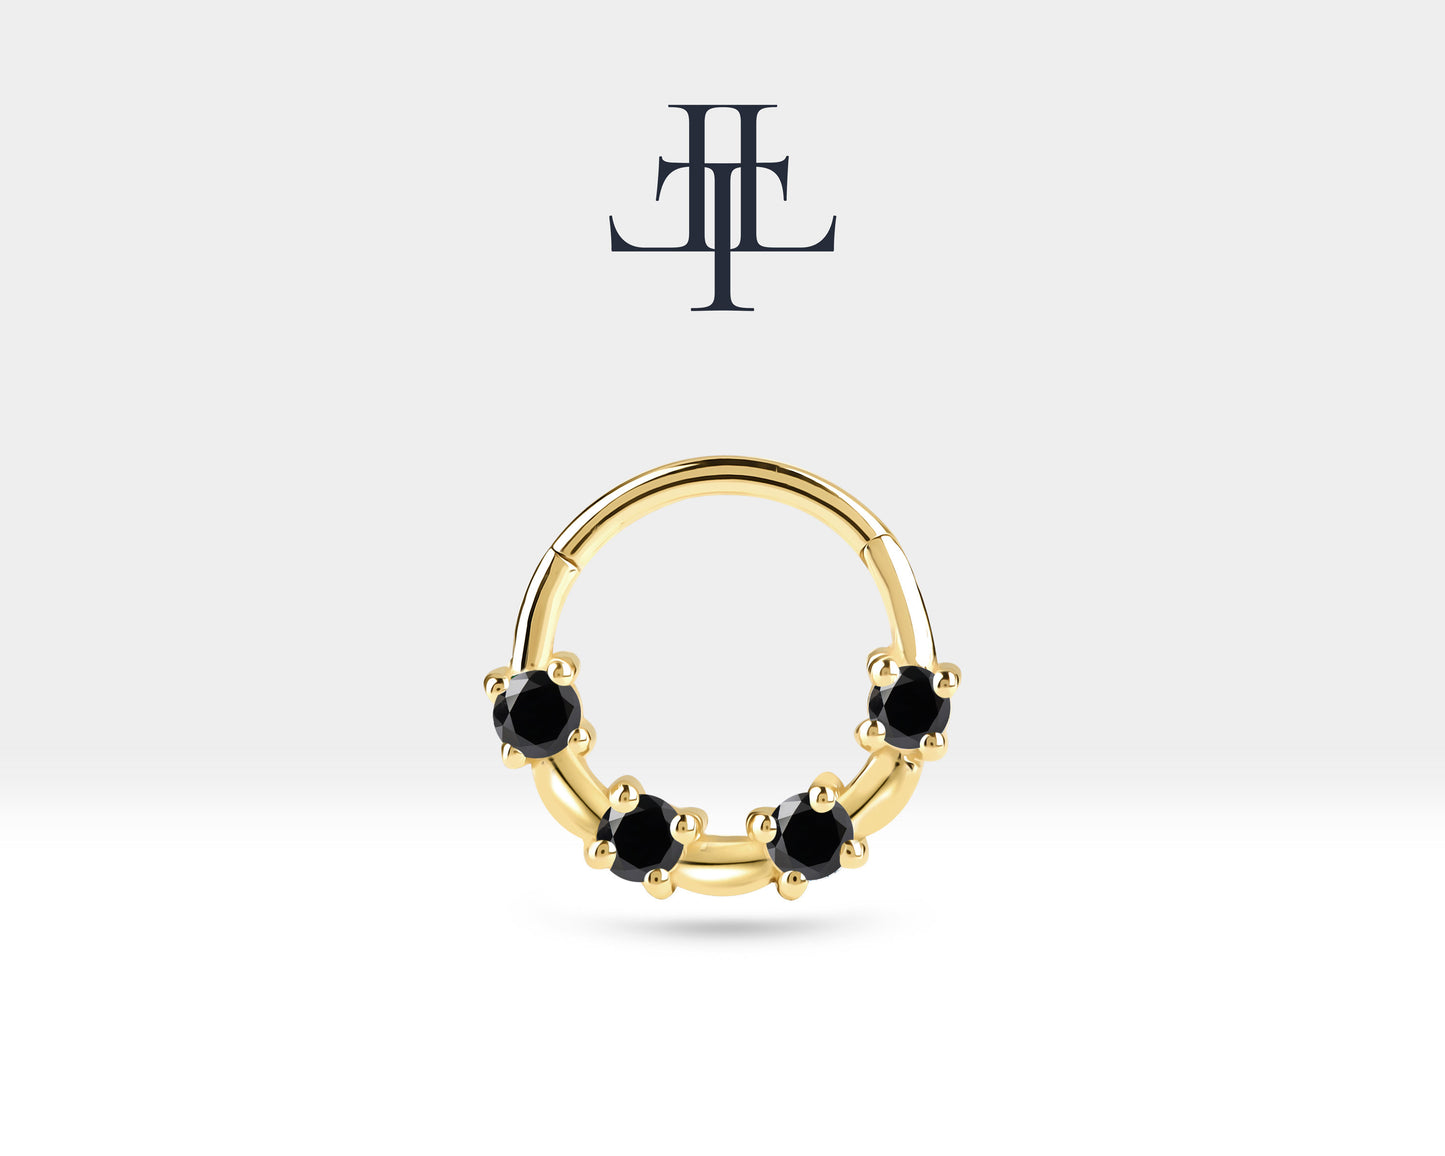 Cartilage Hoop,Four Pieces Black Diamond Design Clicker Piercing,Single Earring,14K Solid Gold,18G